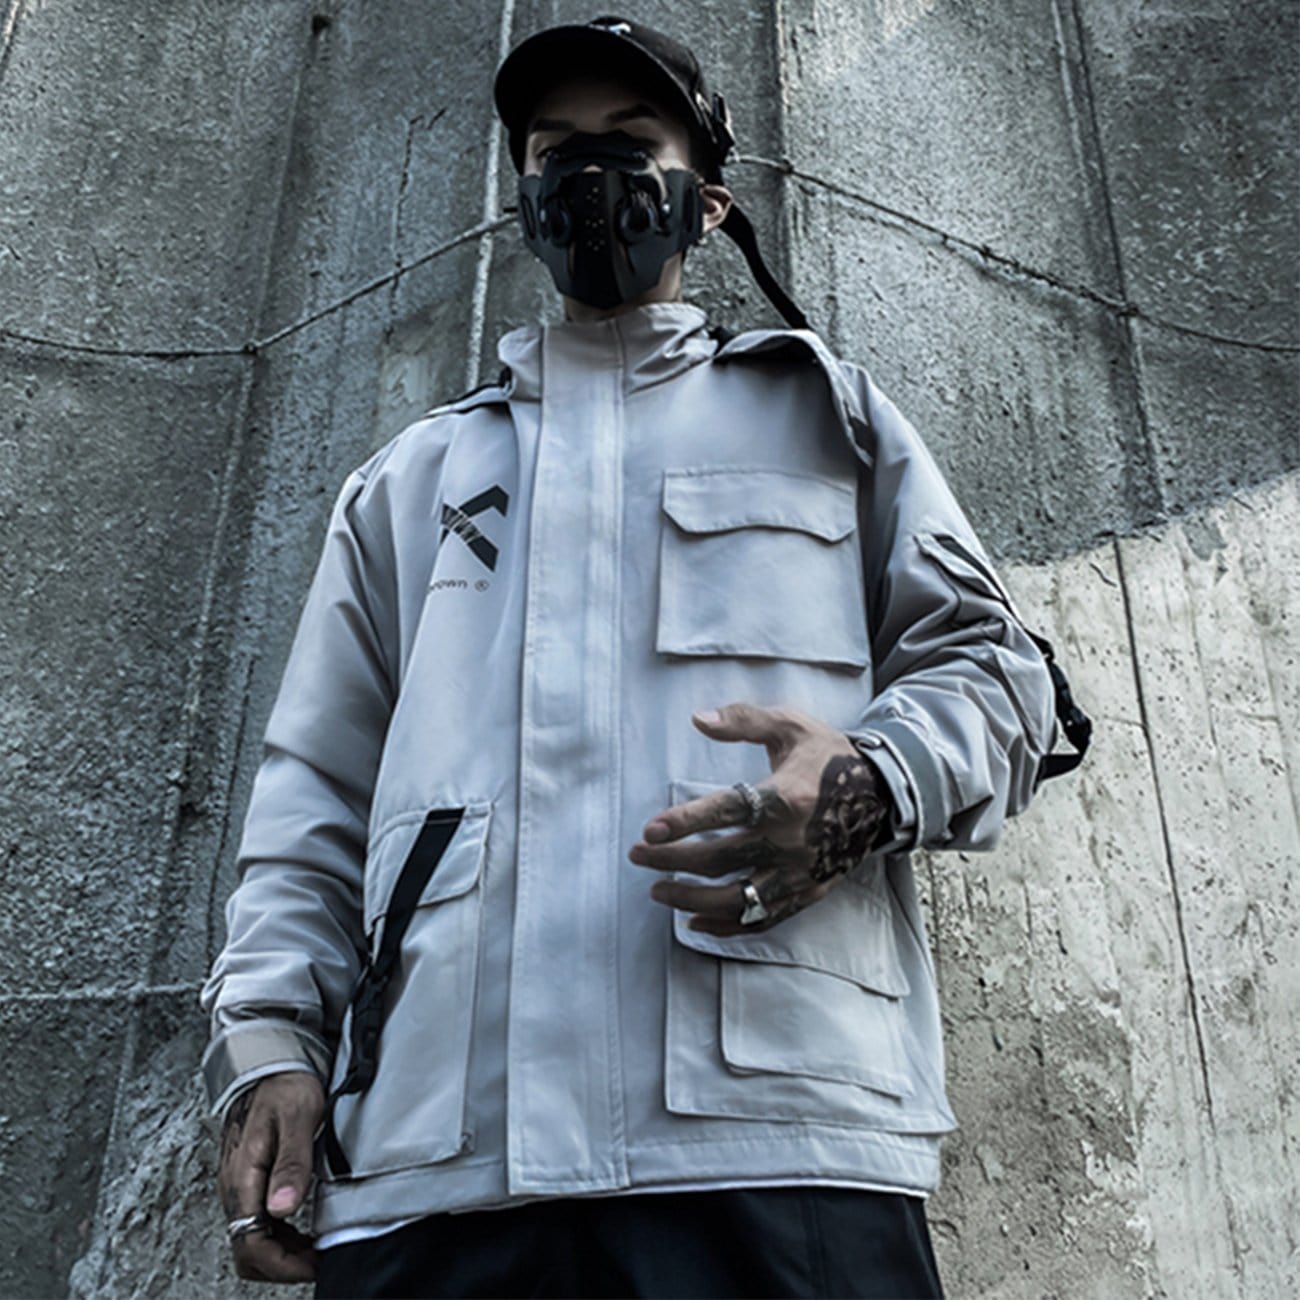 "Ubzvadswe" Jacket Streetwear Brand Techwear Combat Tactical YUGEN THEORY